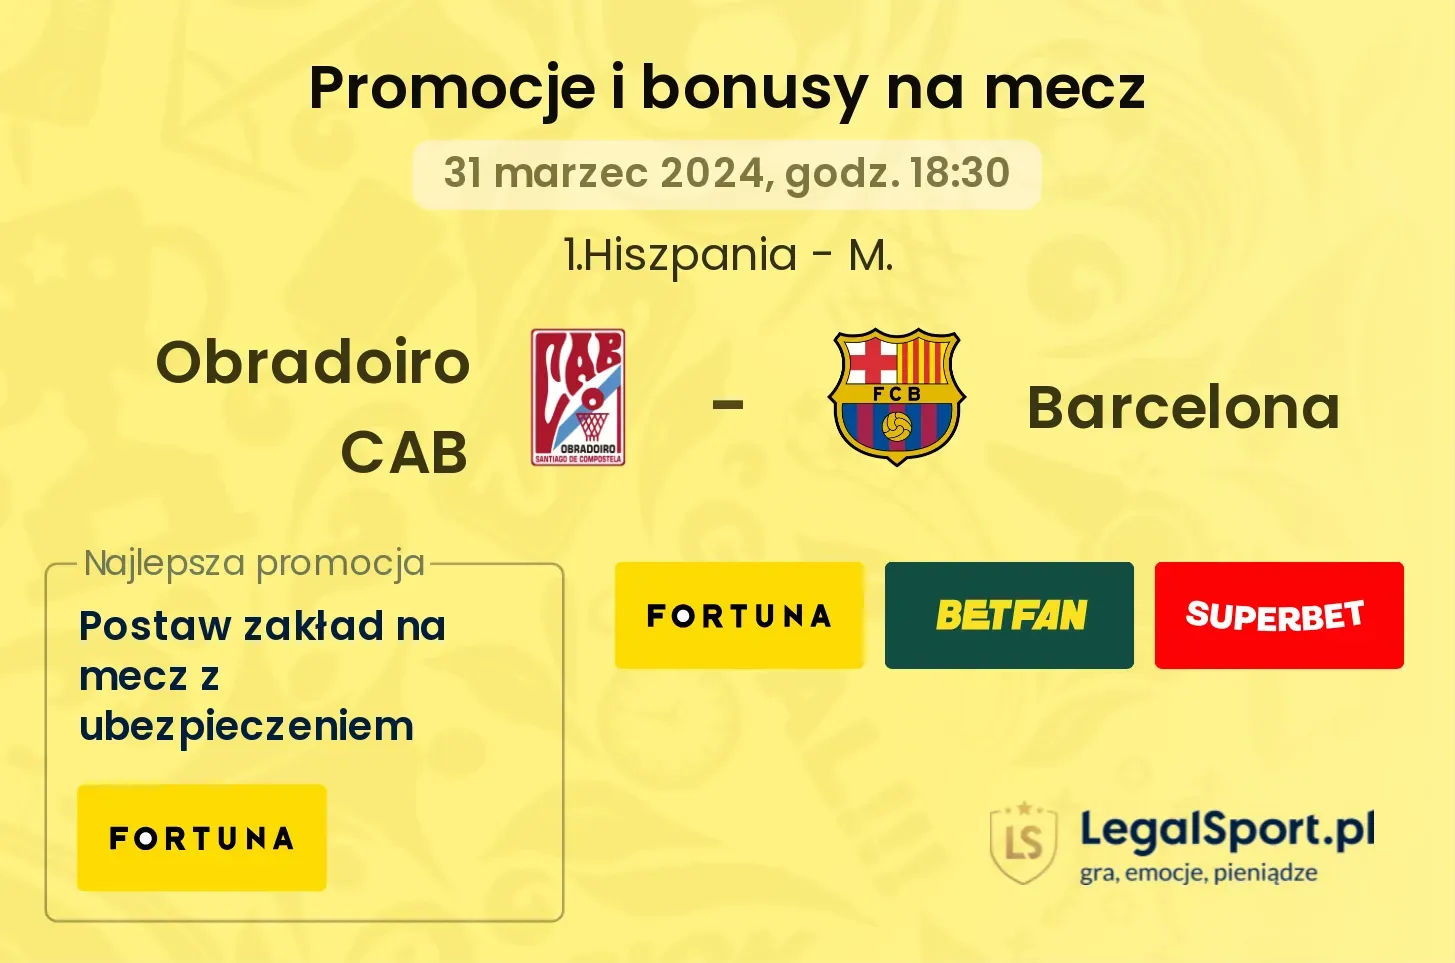 Obradoiro CAB - Barcelona promocje bonusy na mecz